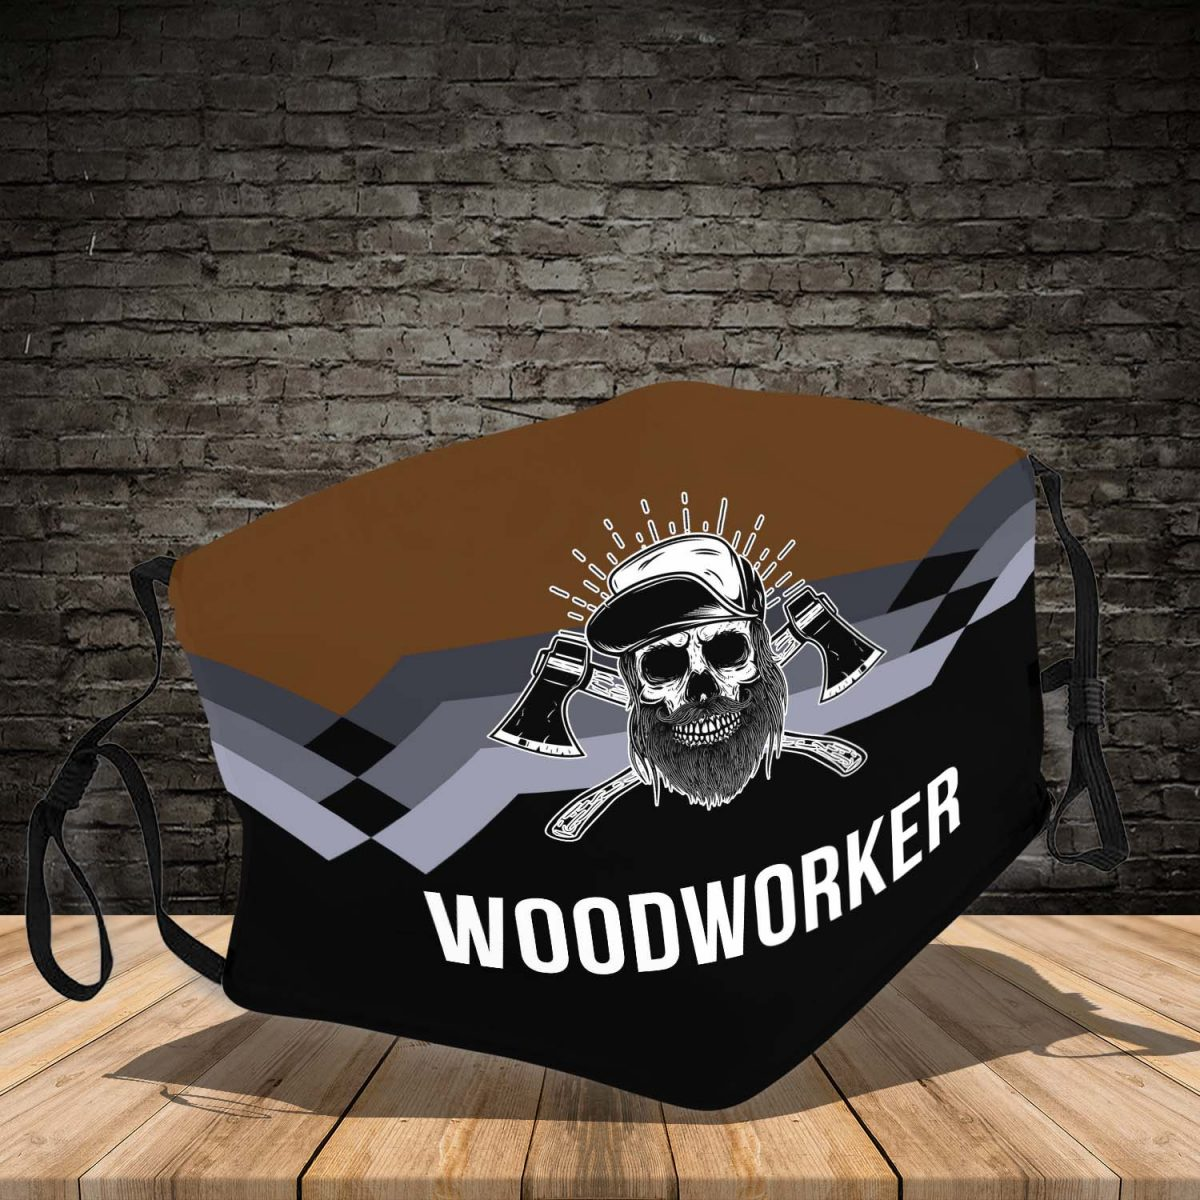 Woodworker 3d face mask